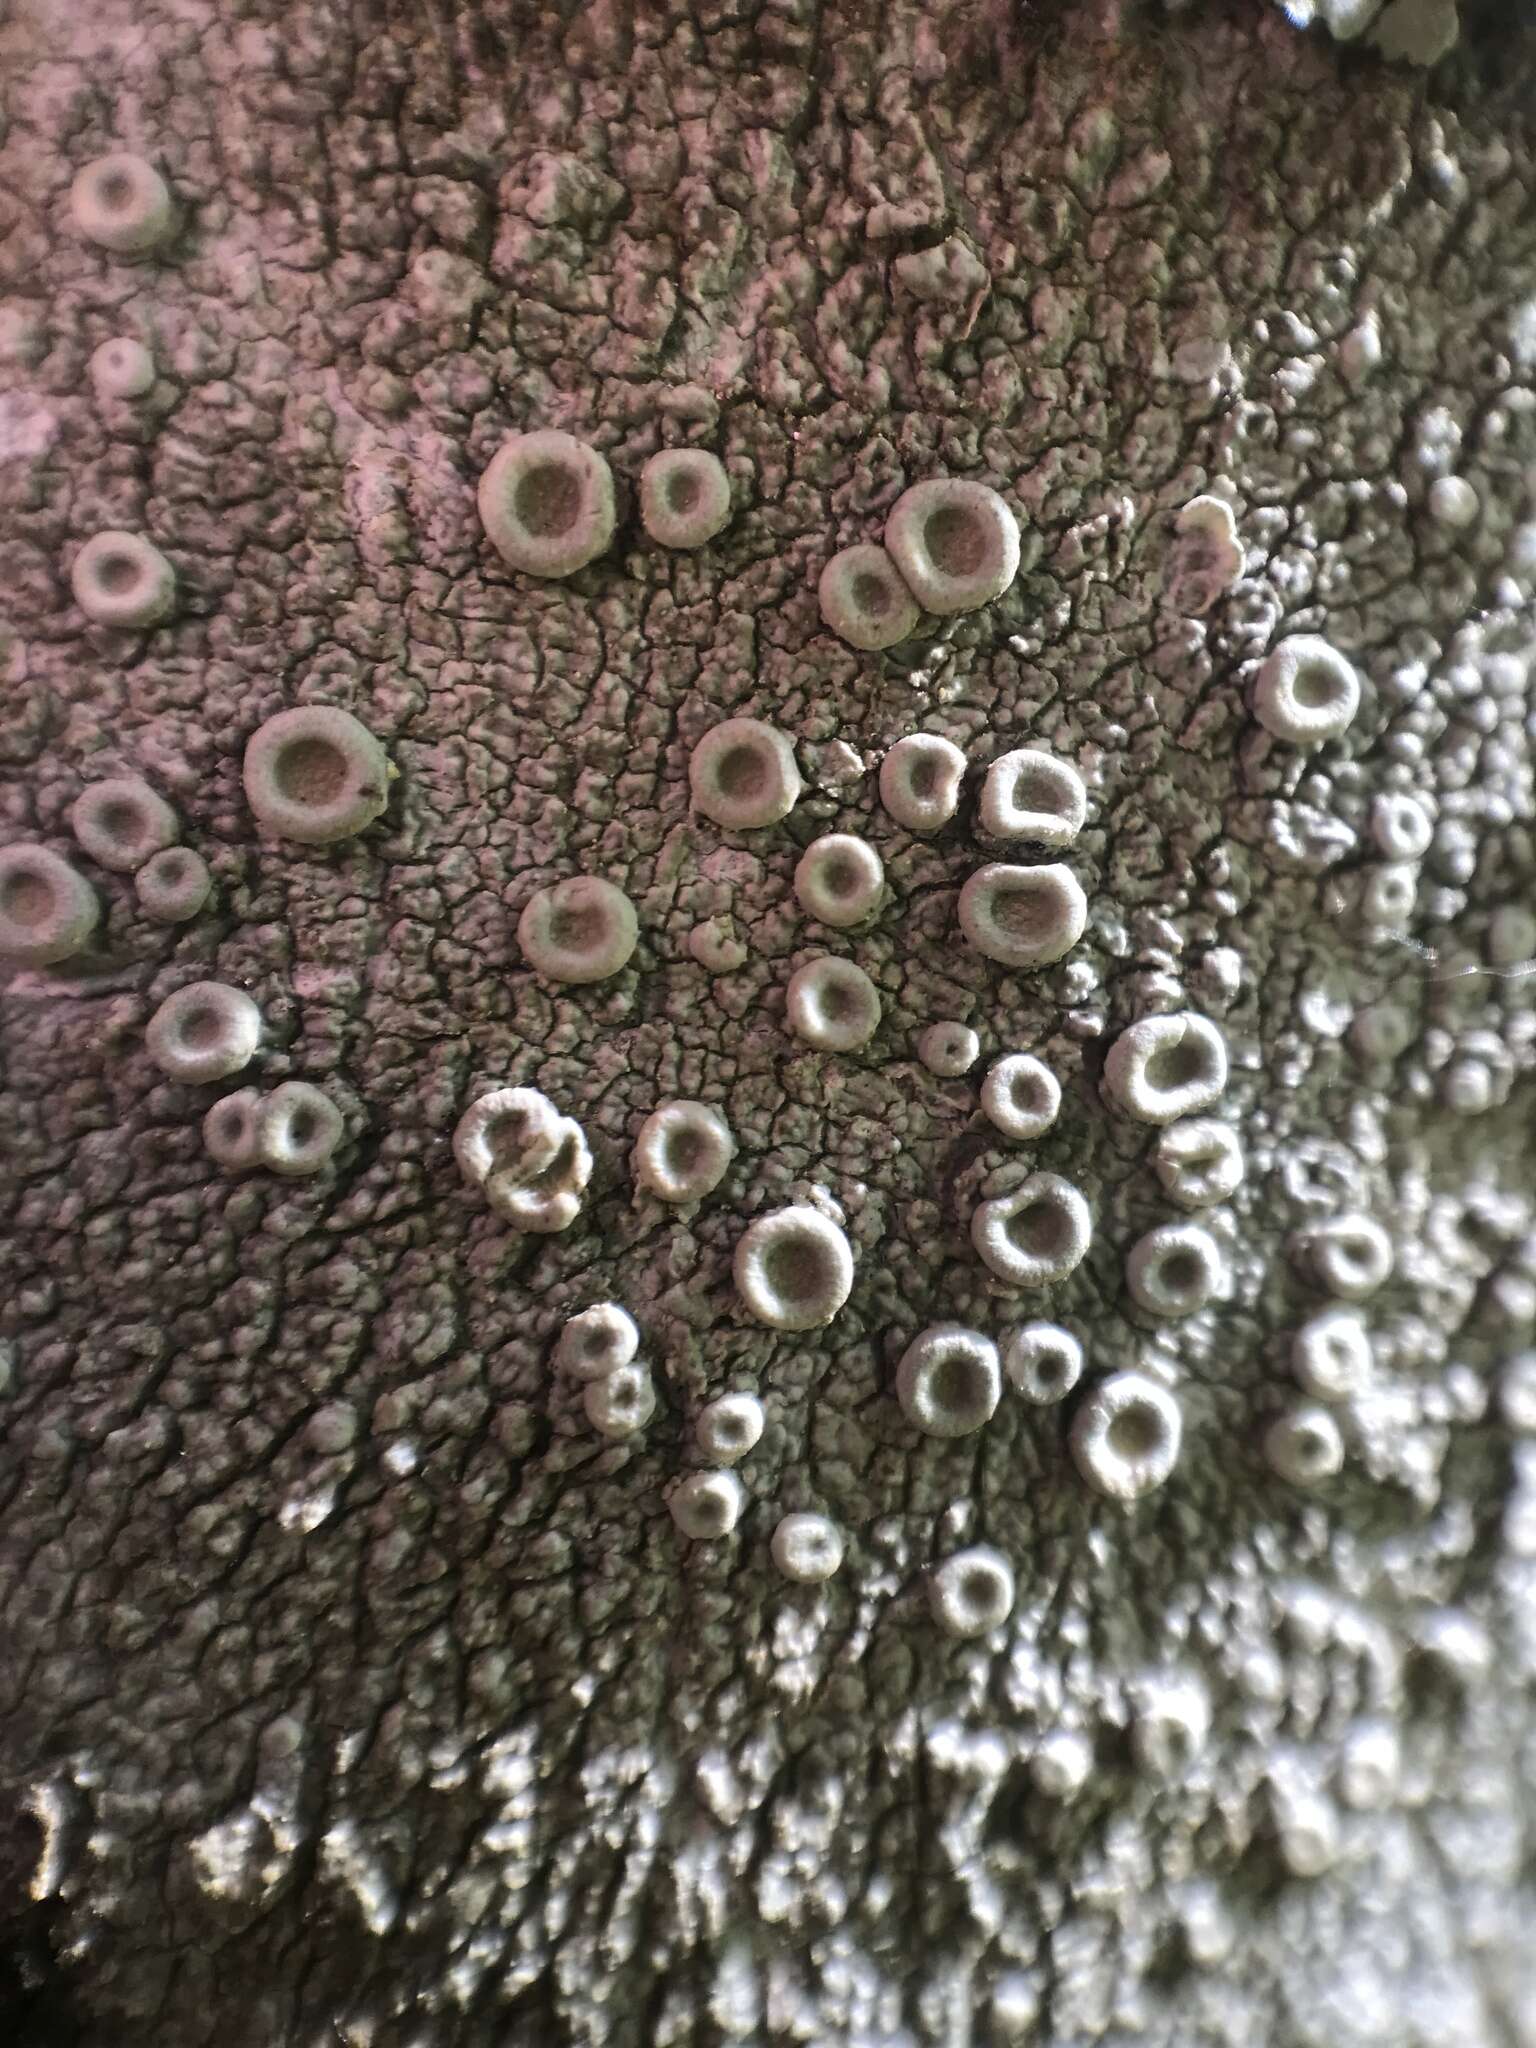 Image of Frosty saucer lichen